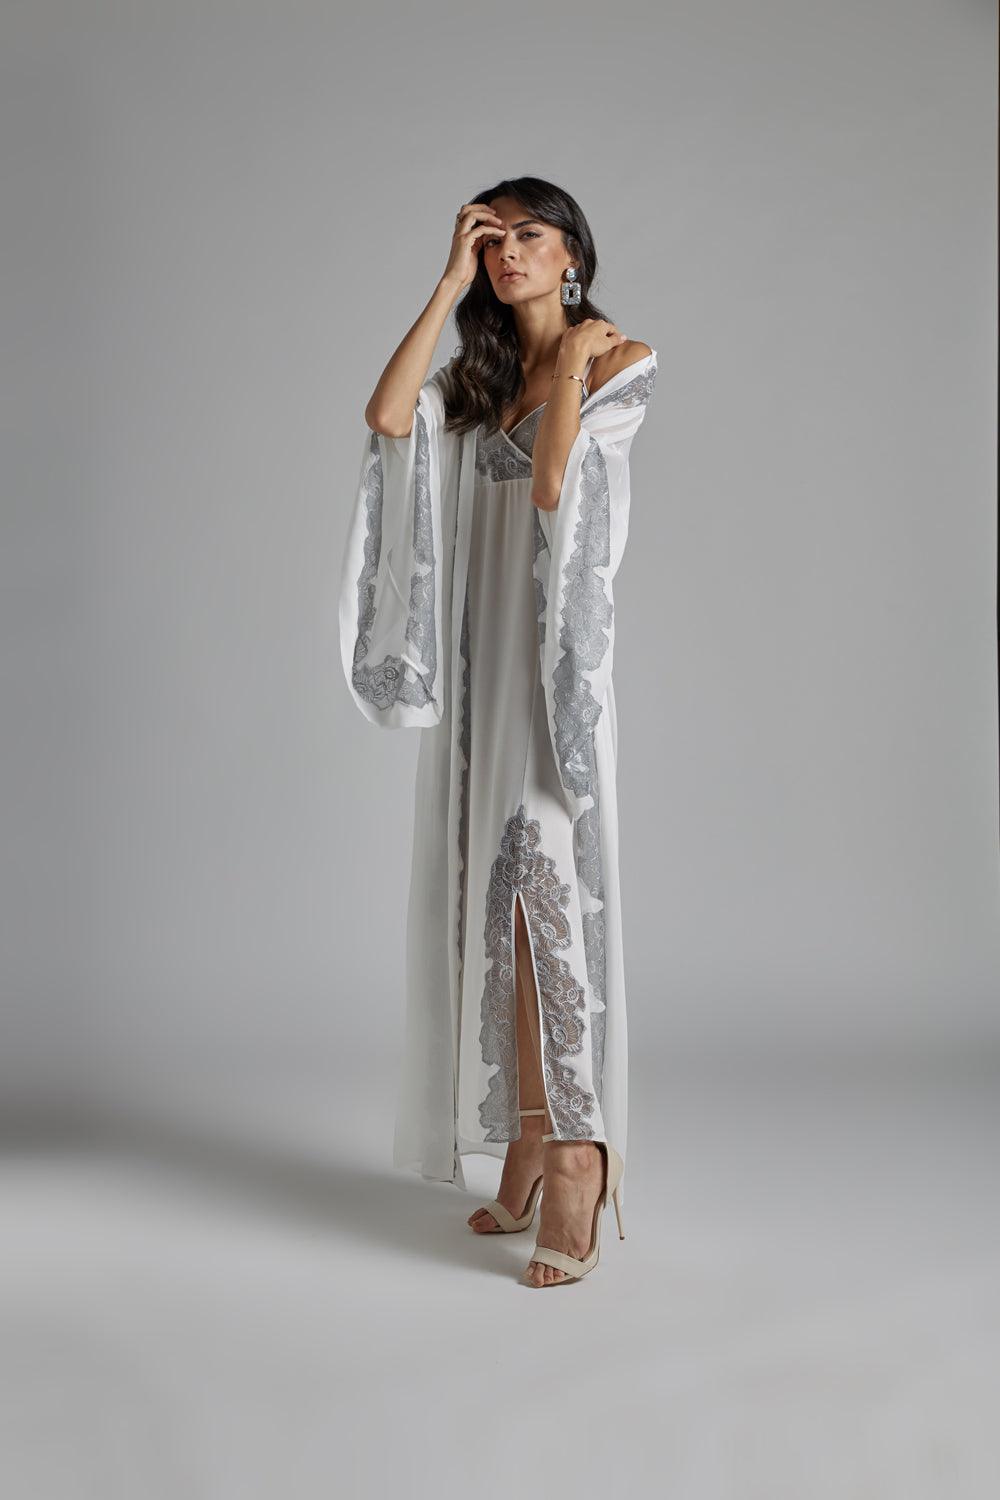 Silk Chiffon Off White Robe Set - Femme Belle - Bocan